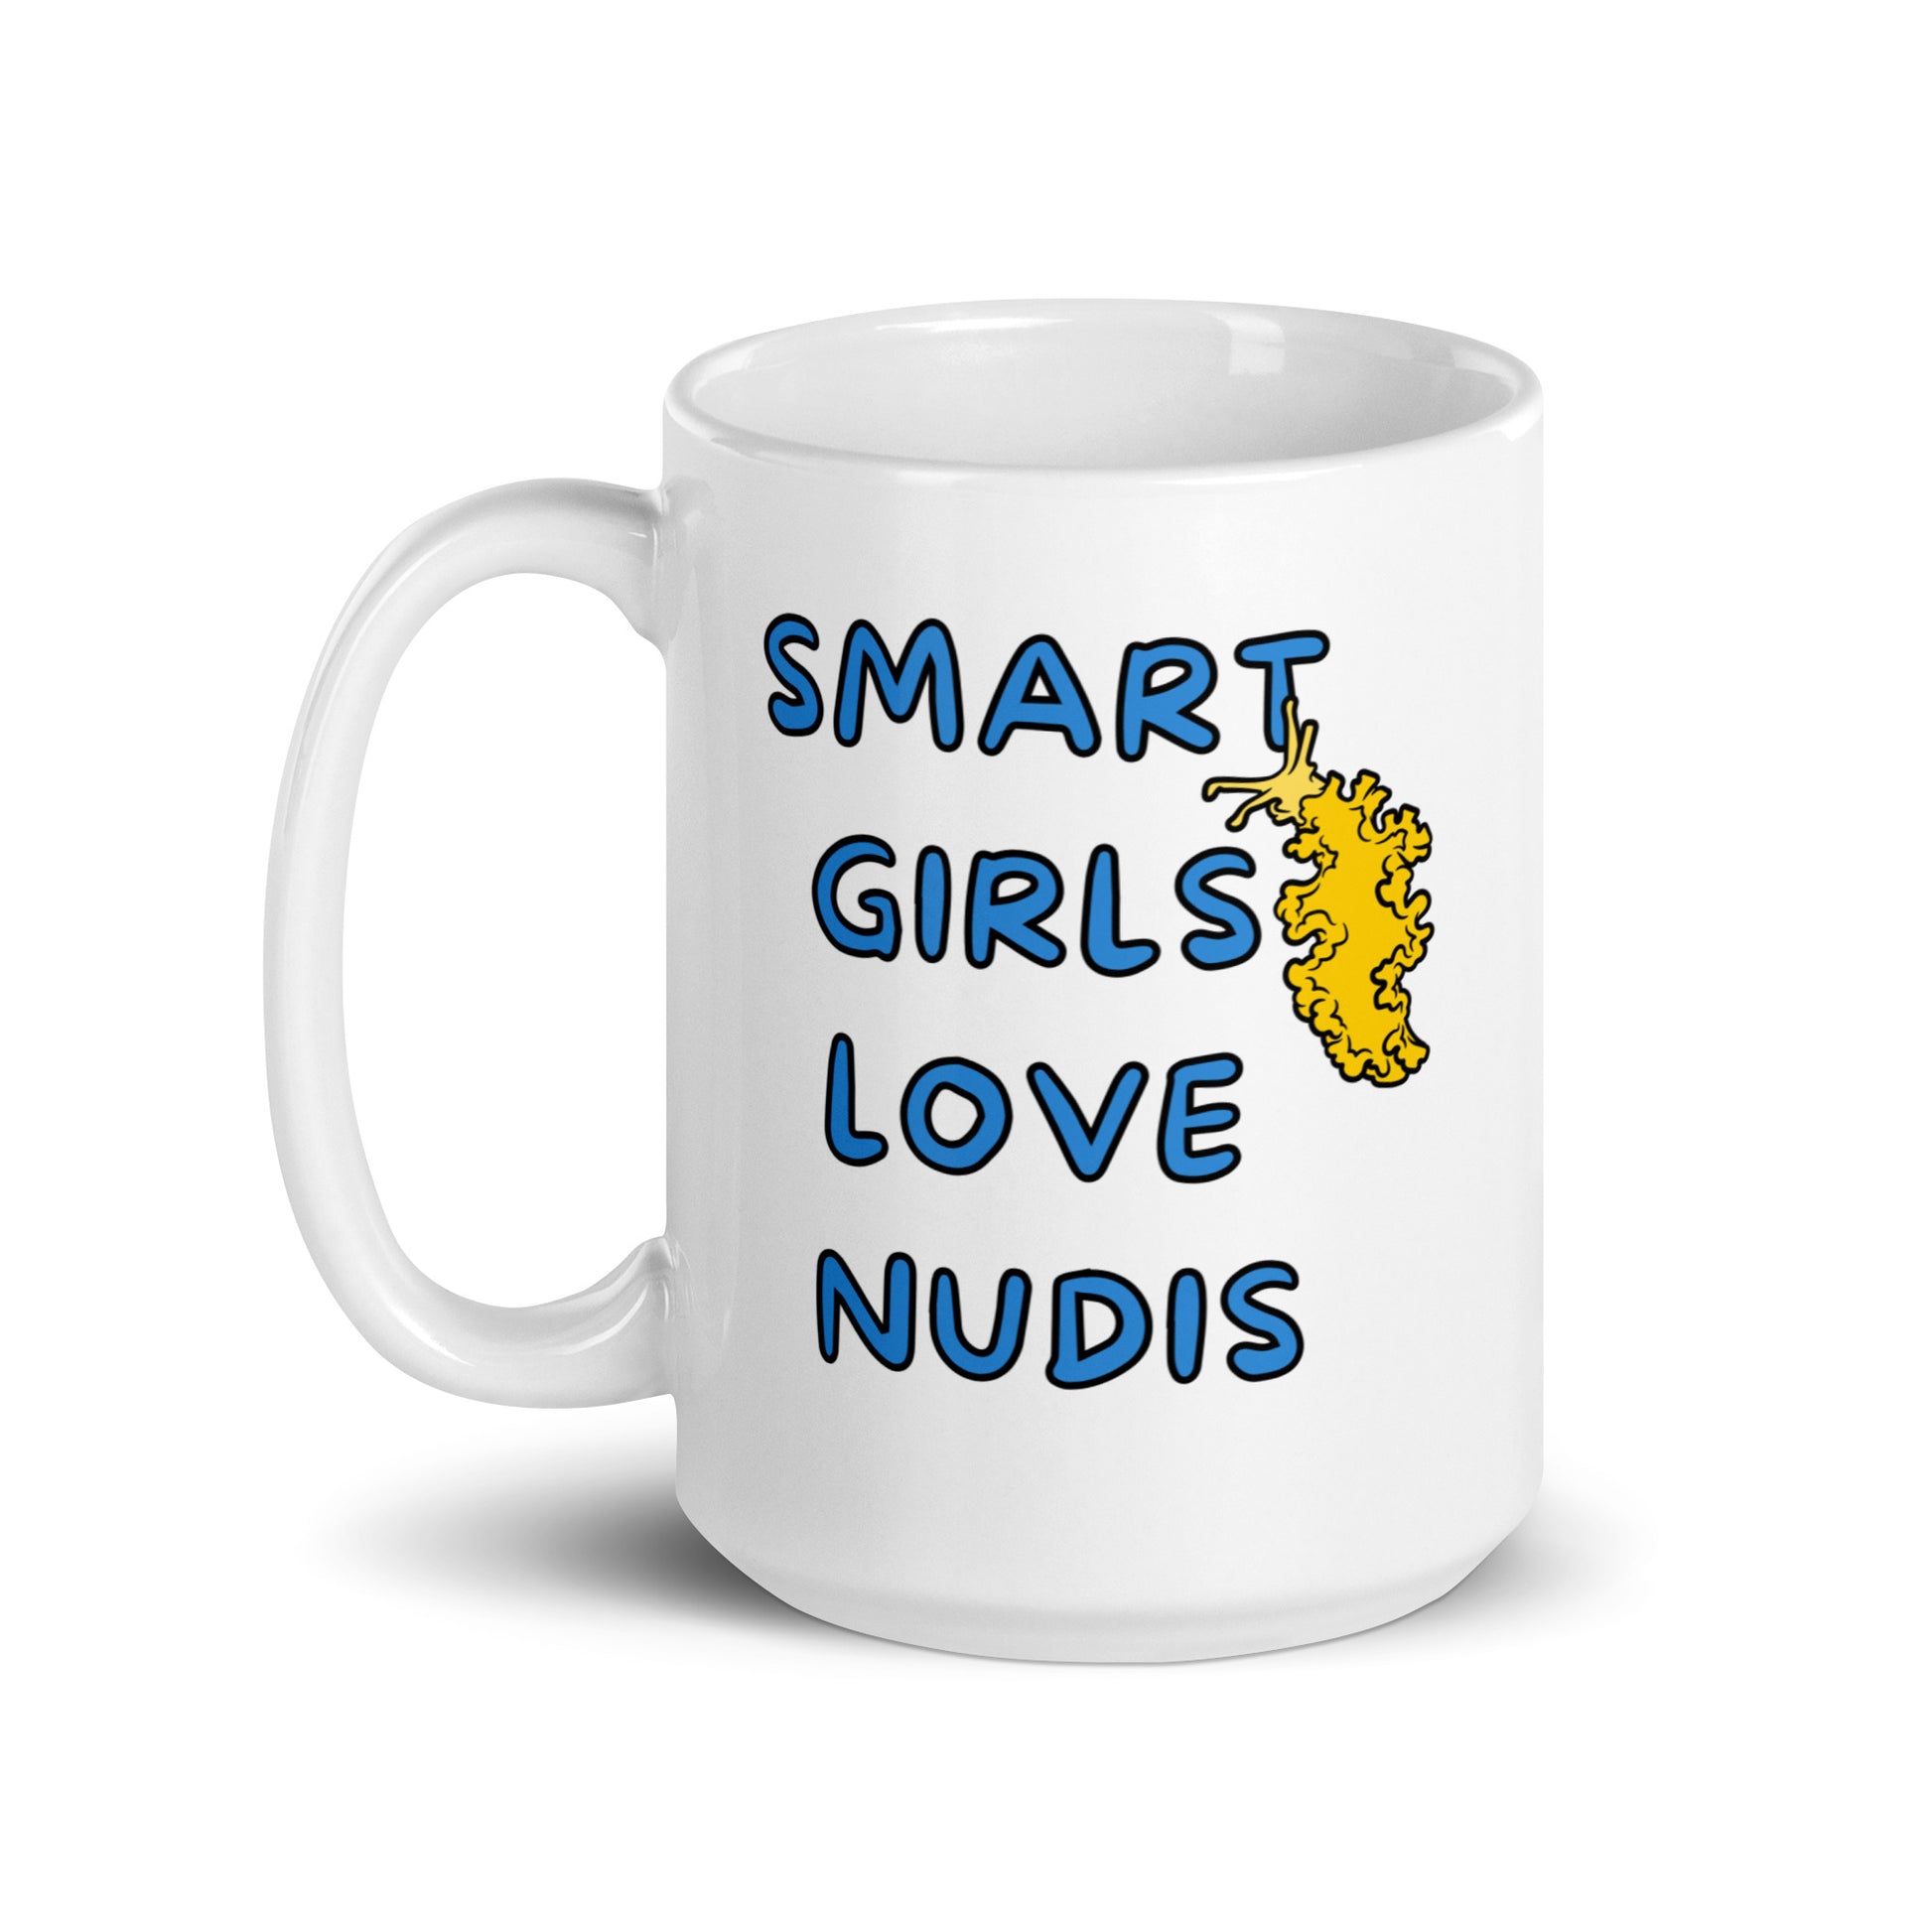 Nudibranch mug smart girls love nudis